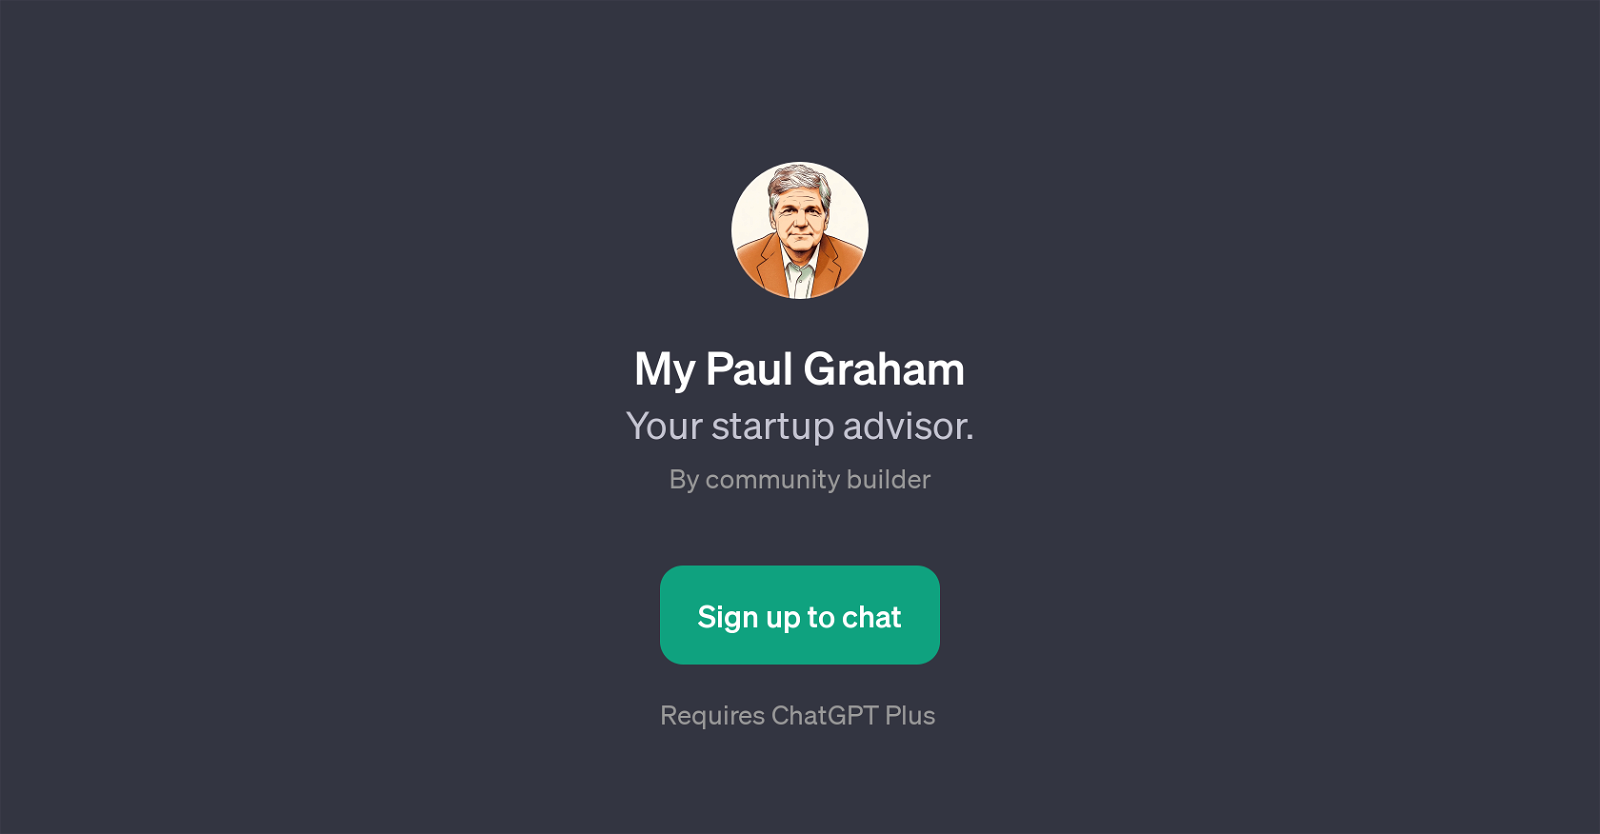 My Paul Graham website